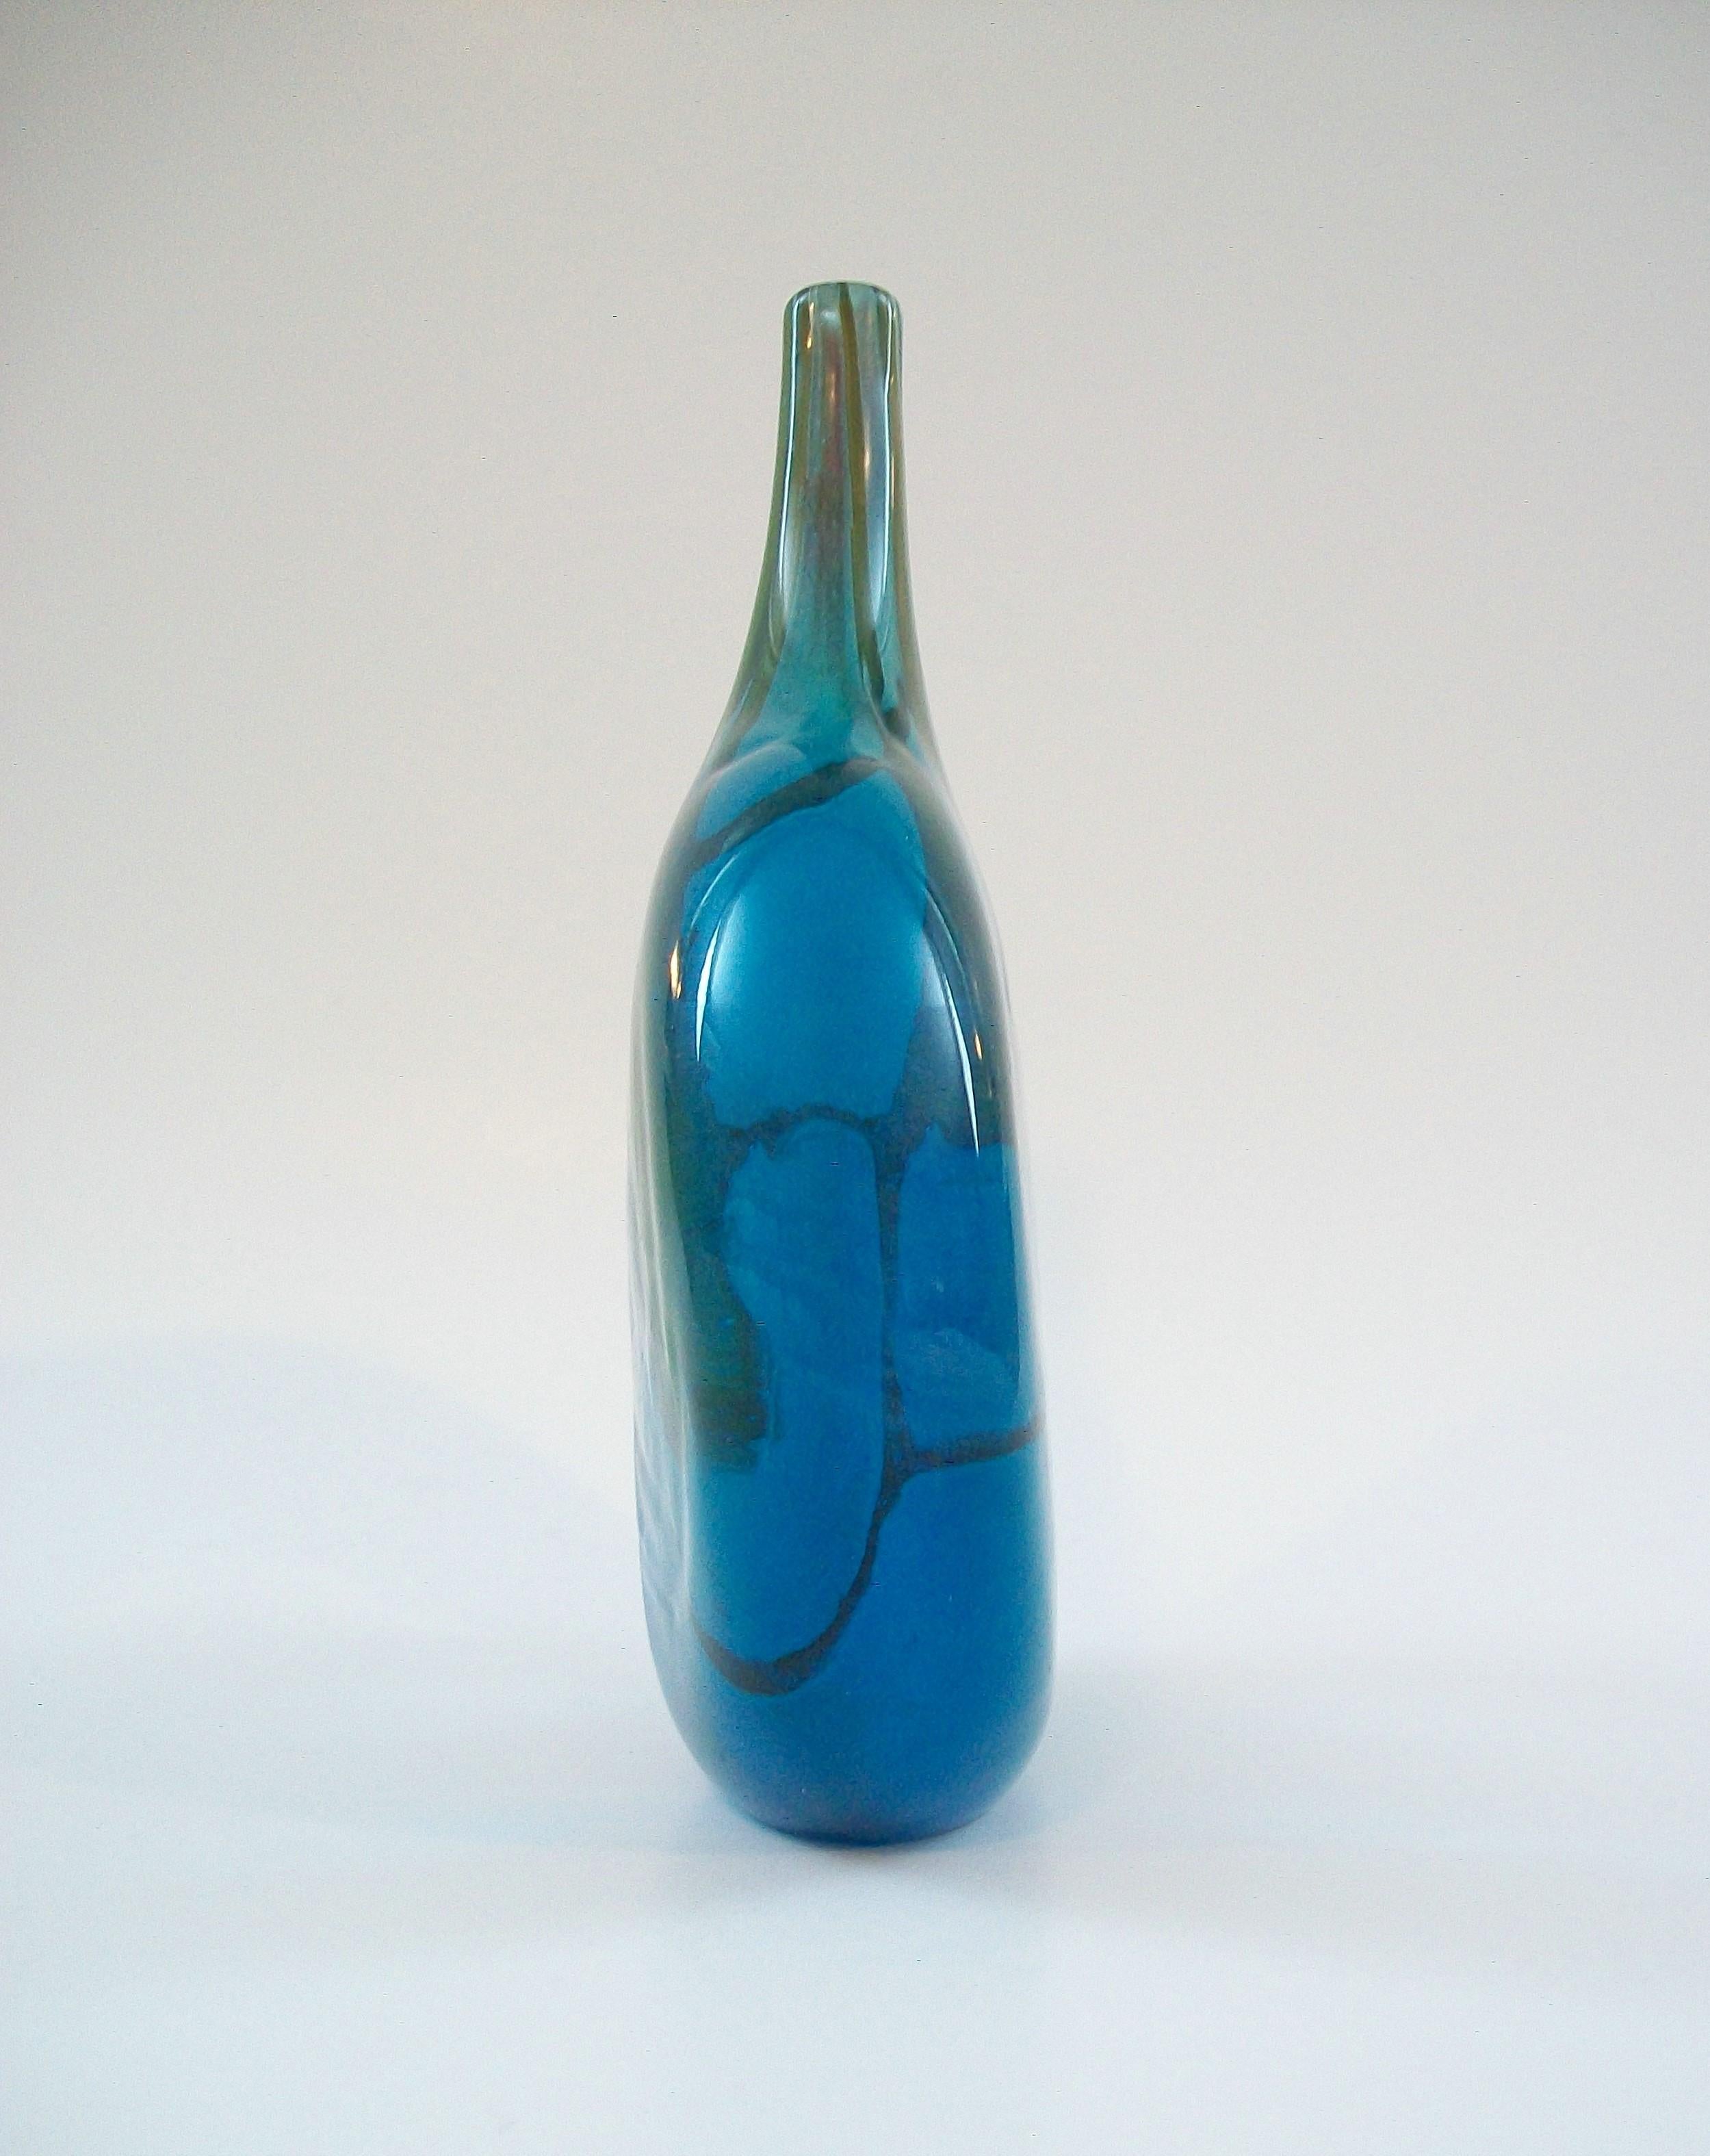 Forged MDINA - MICHAEL HARRIS - Glass Fish Vase - Unsigned - Malta - Circa 1970's For Sale